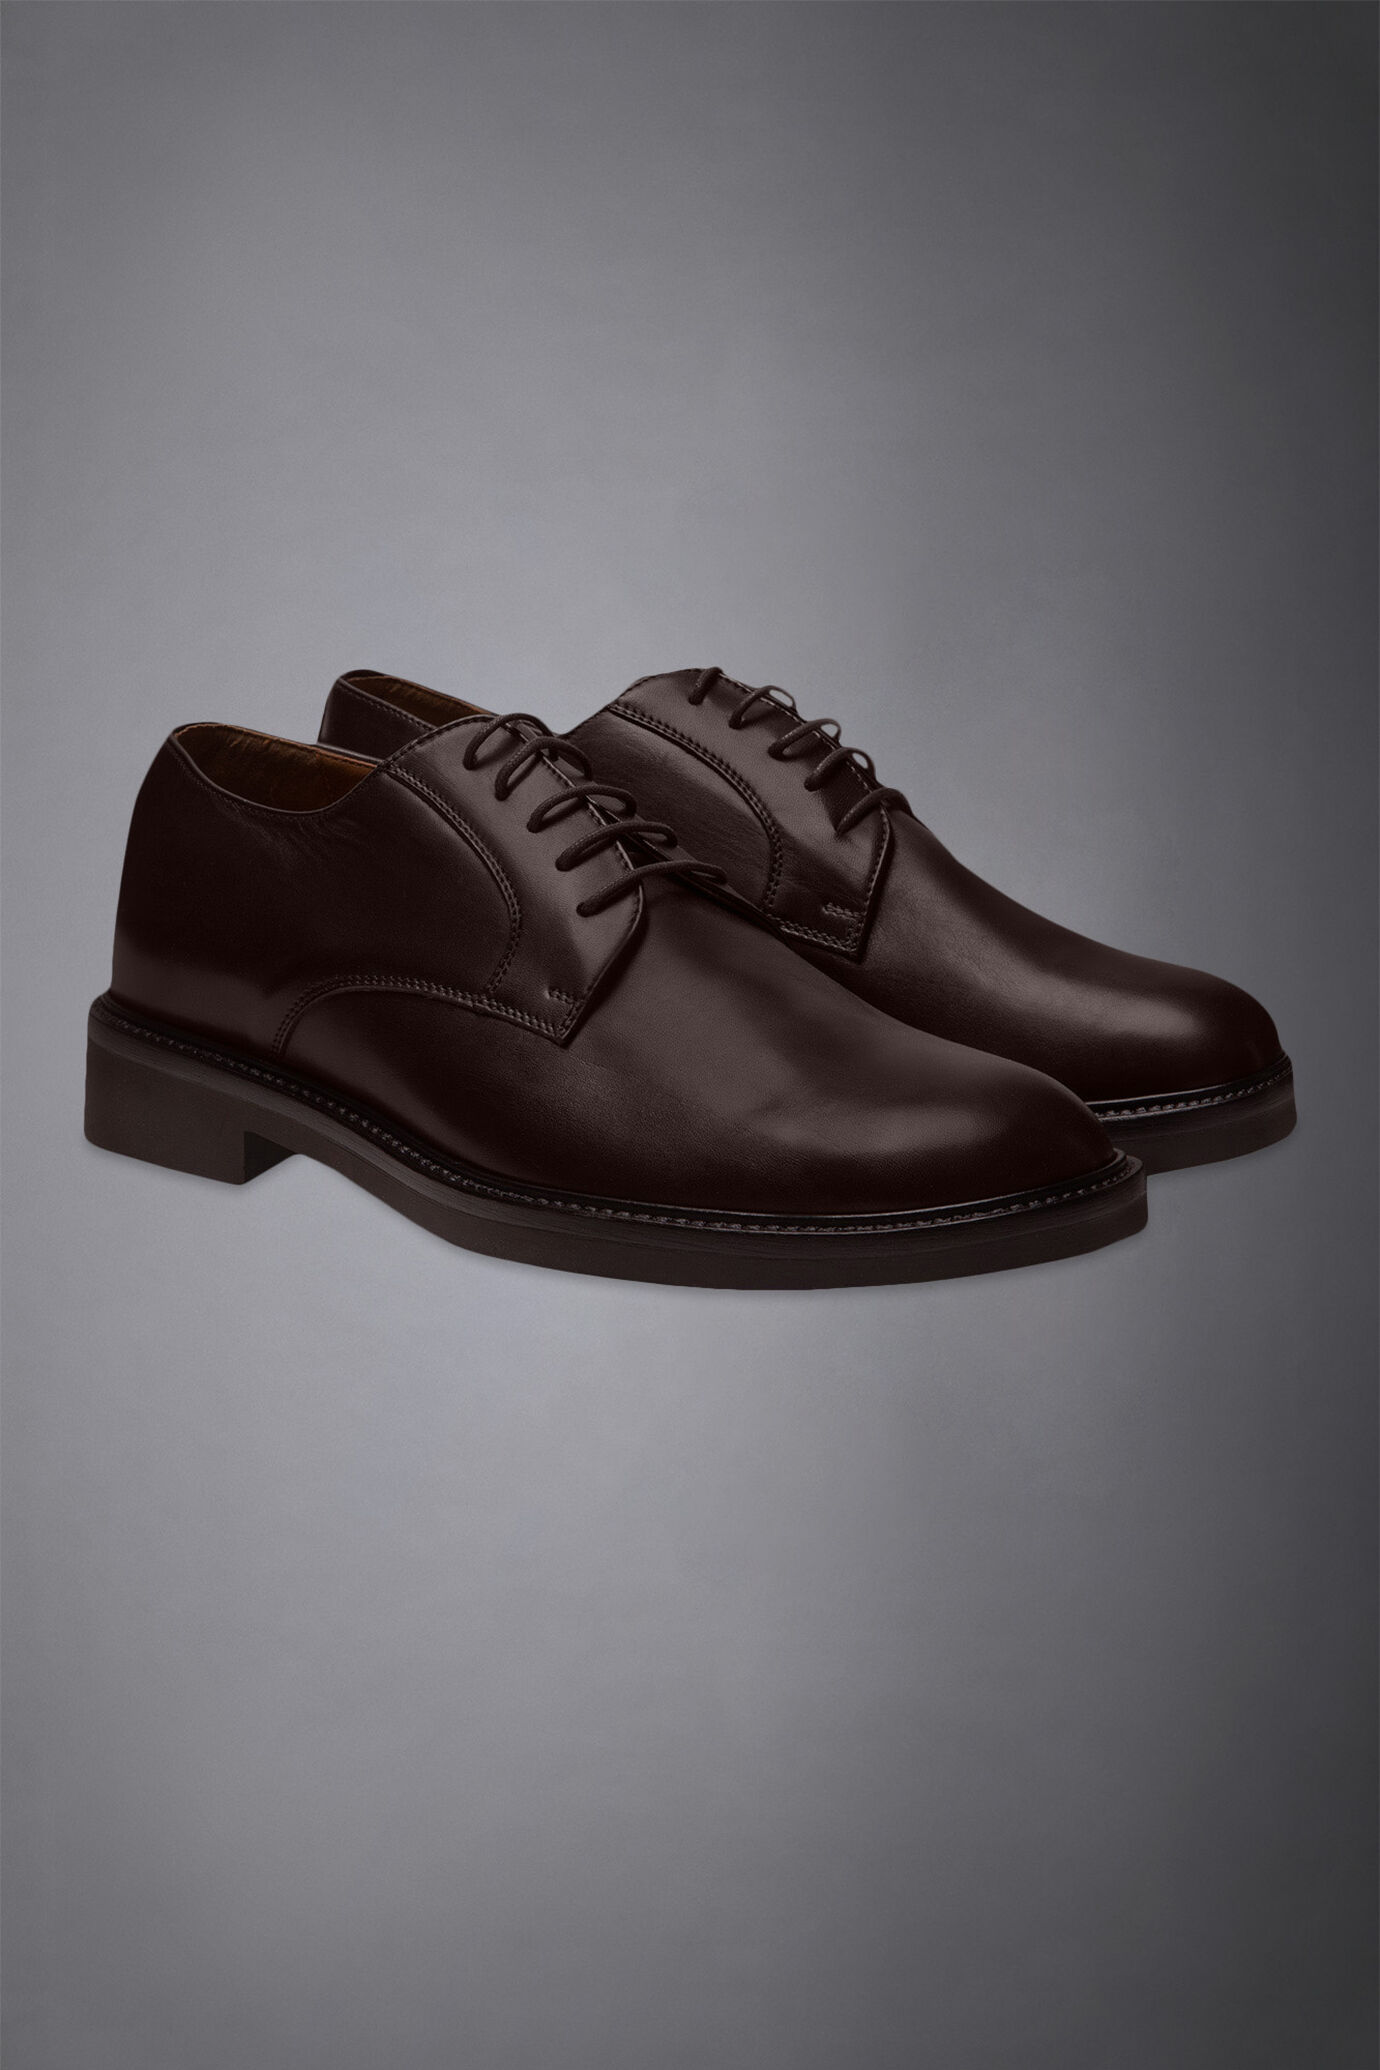 Men's Derby shoes 100% leather